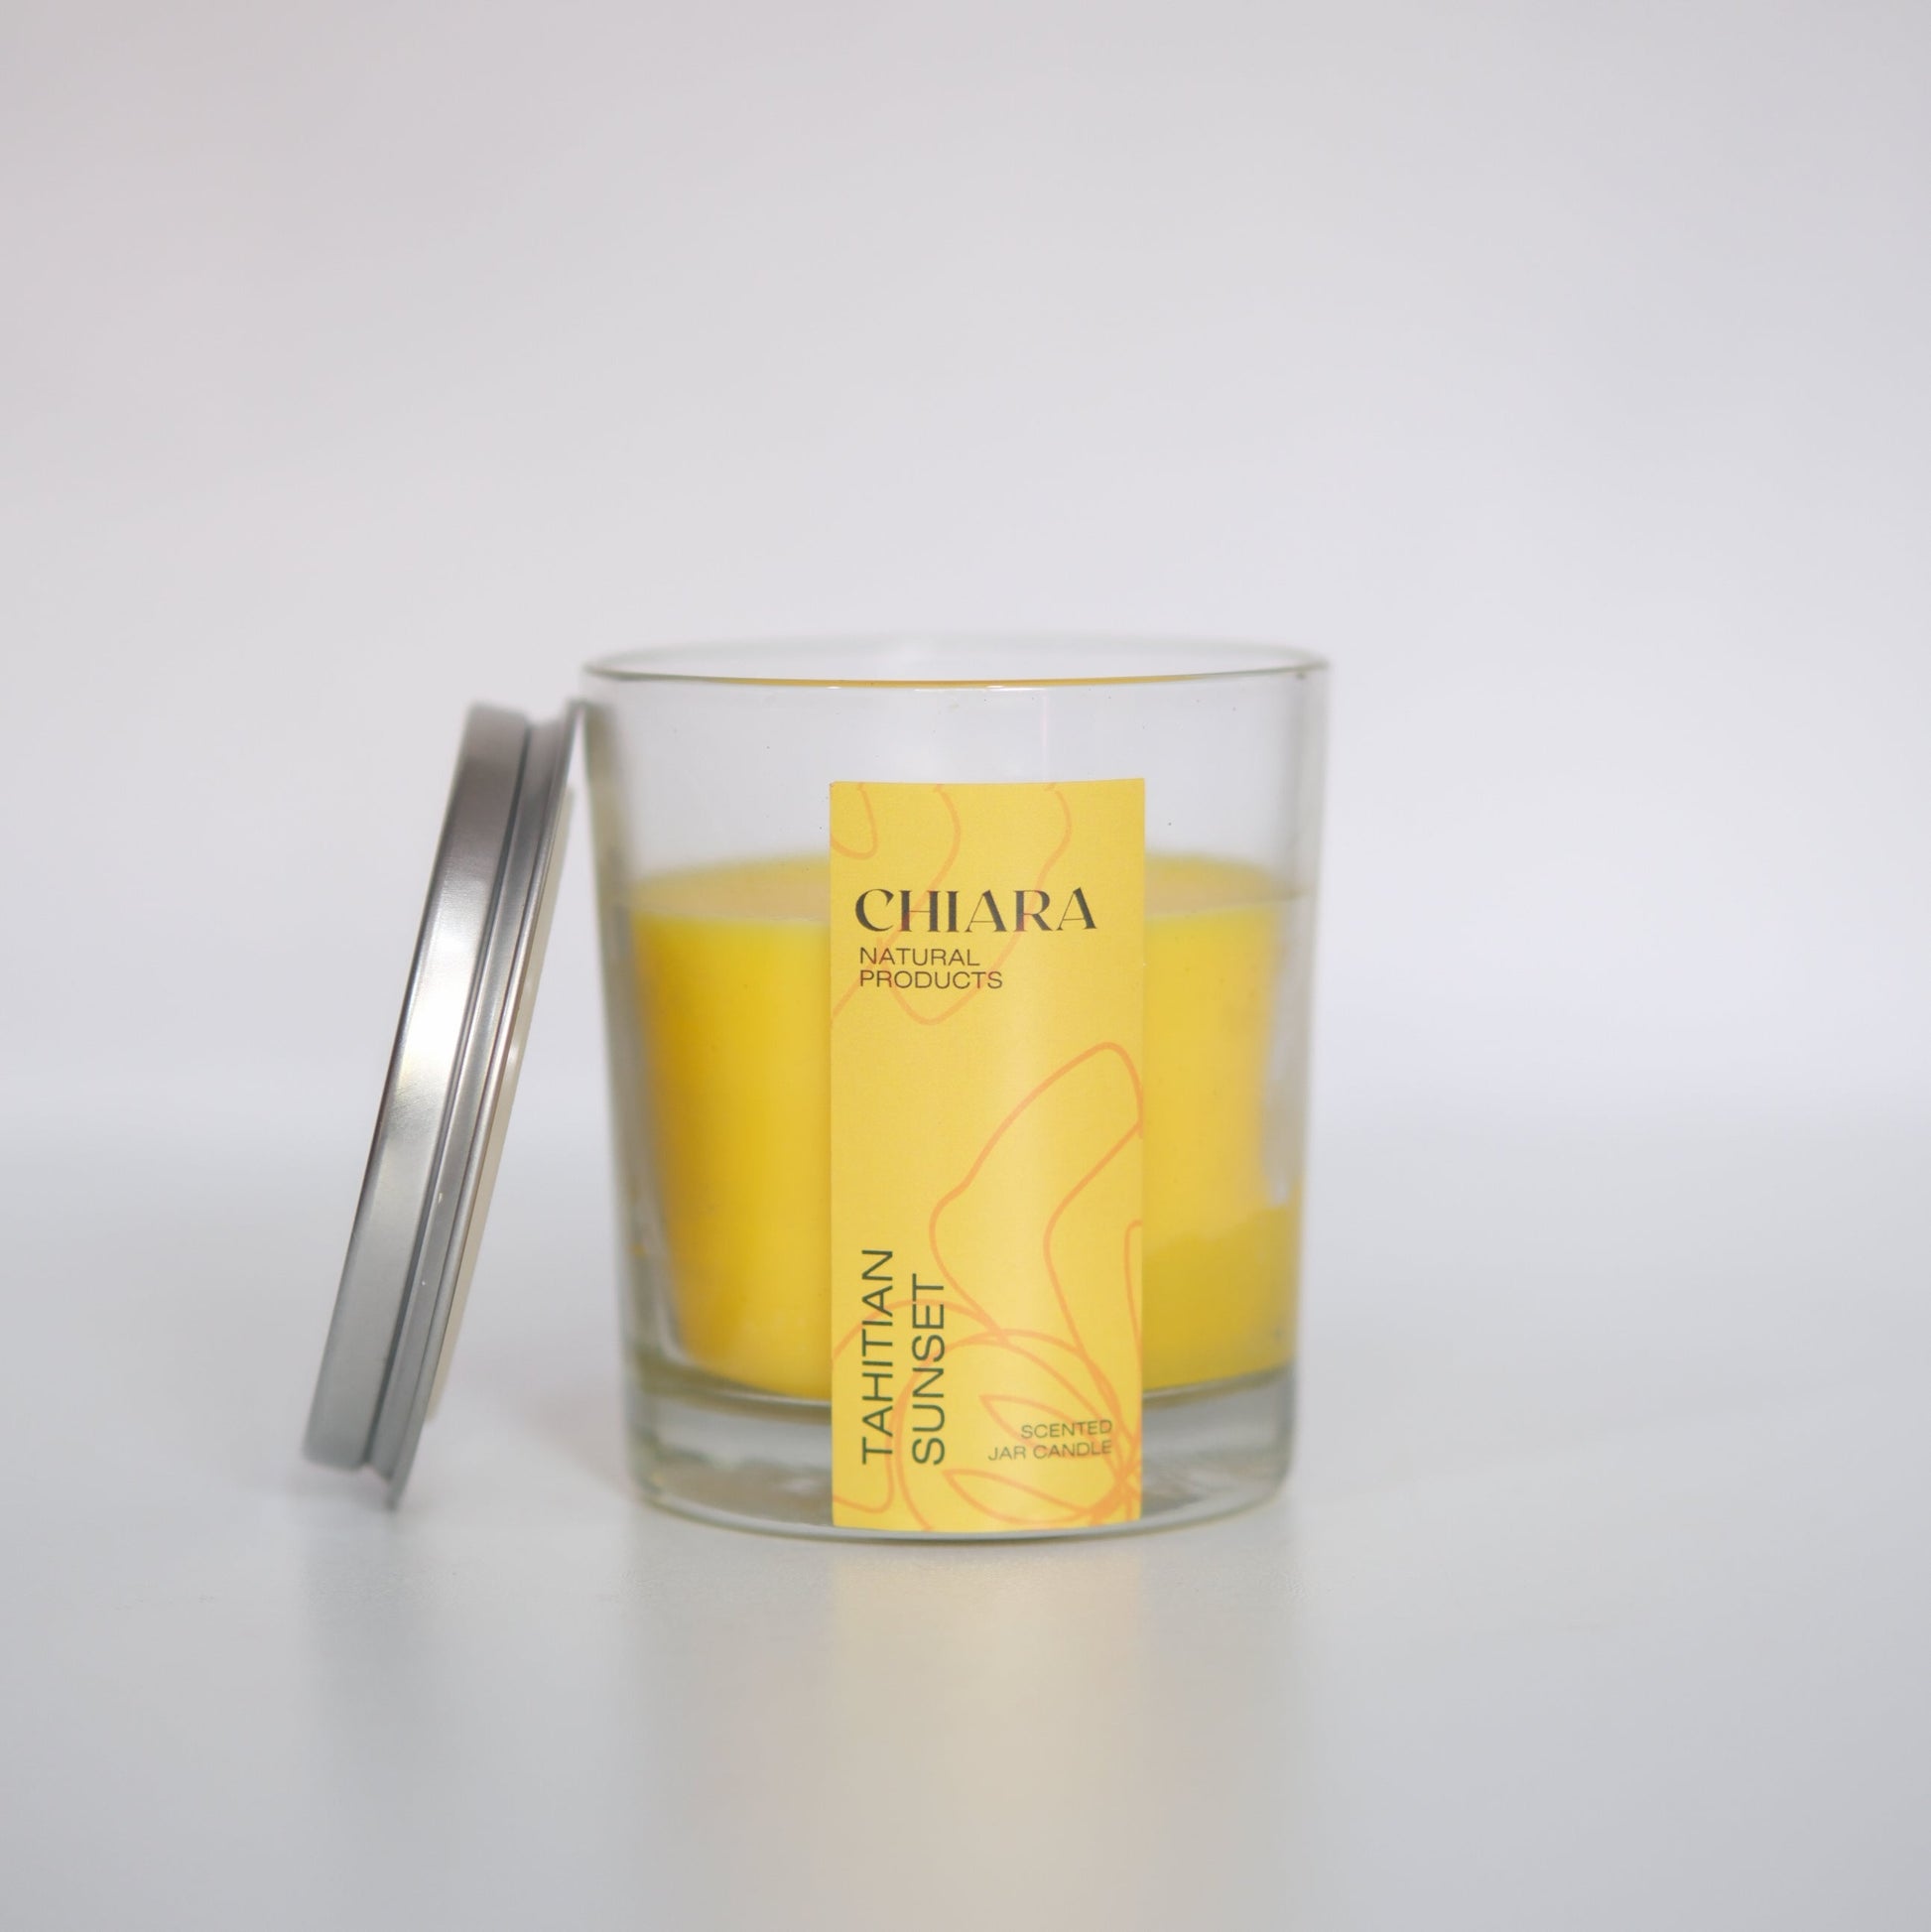 Charming jar candle CHIARA